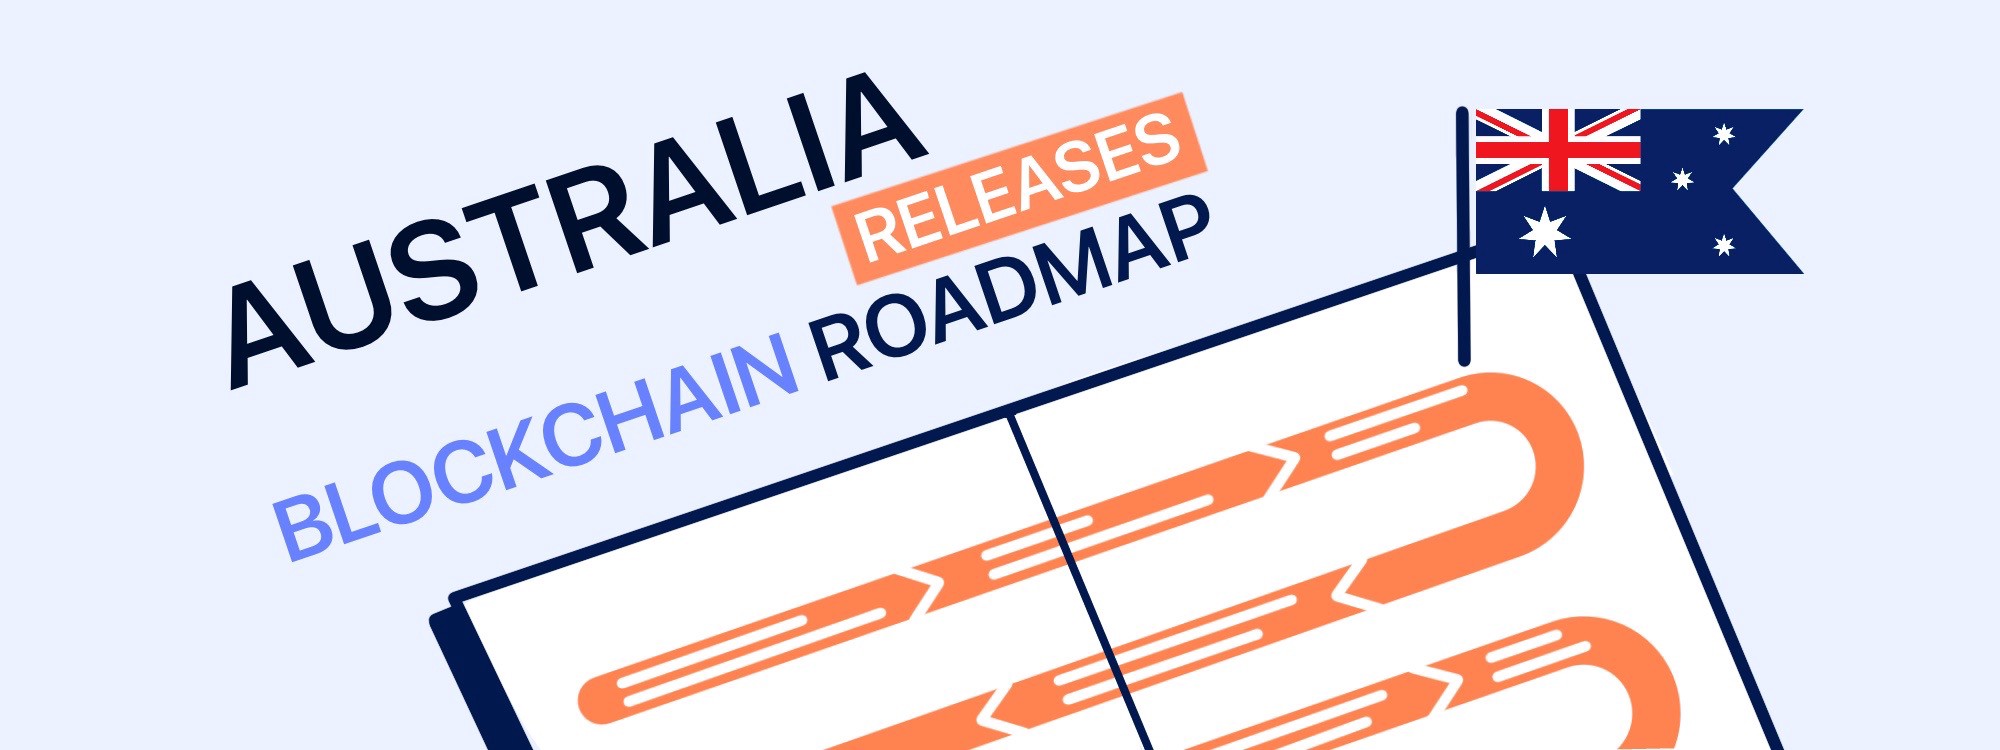 Australia releases blockchain roadmap